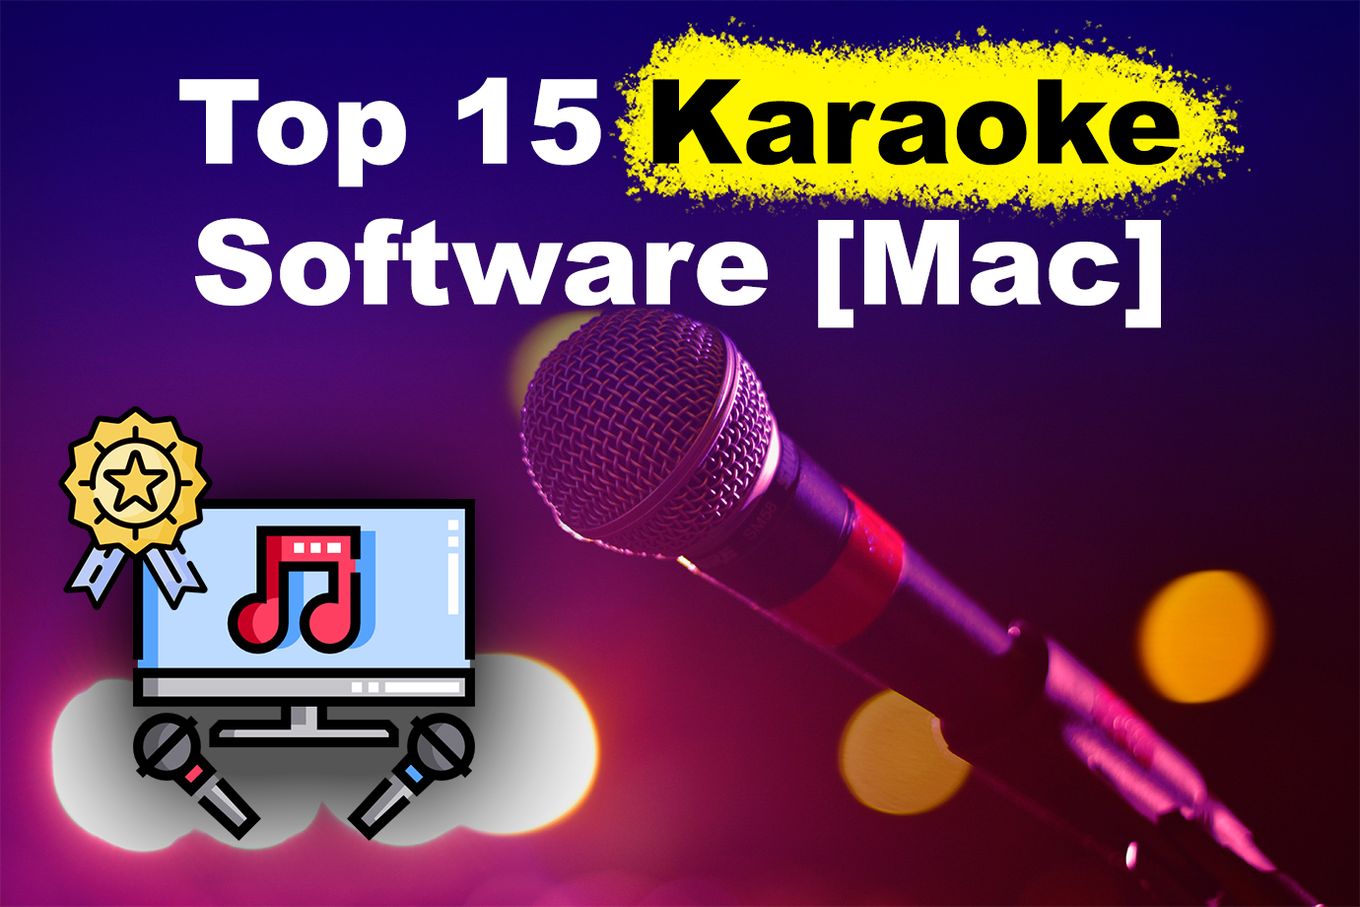 karaoke for mac free download